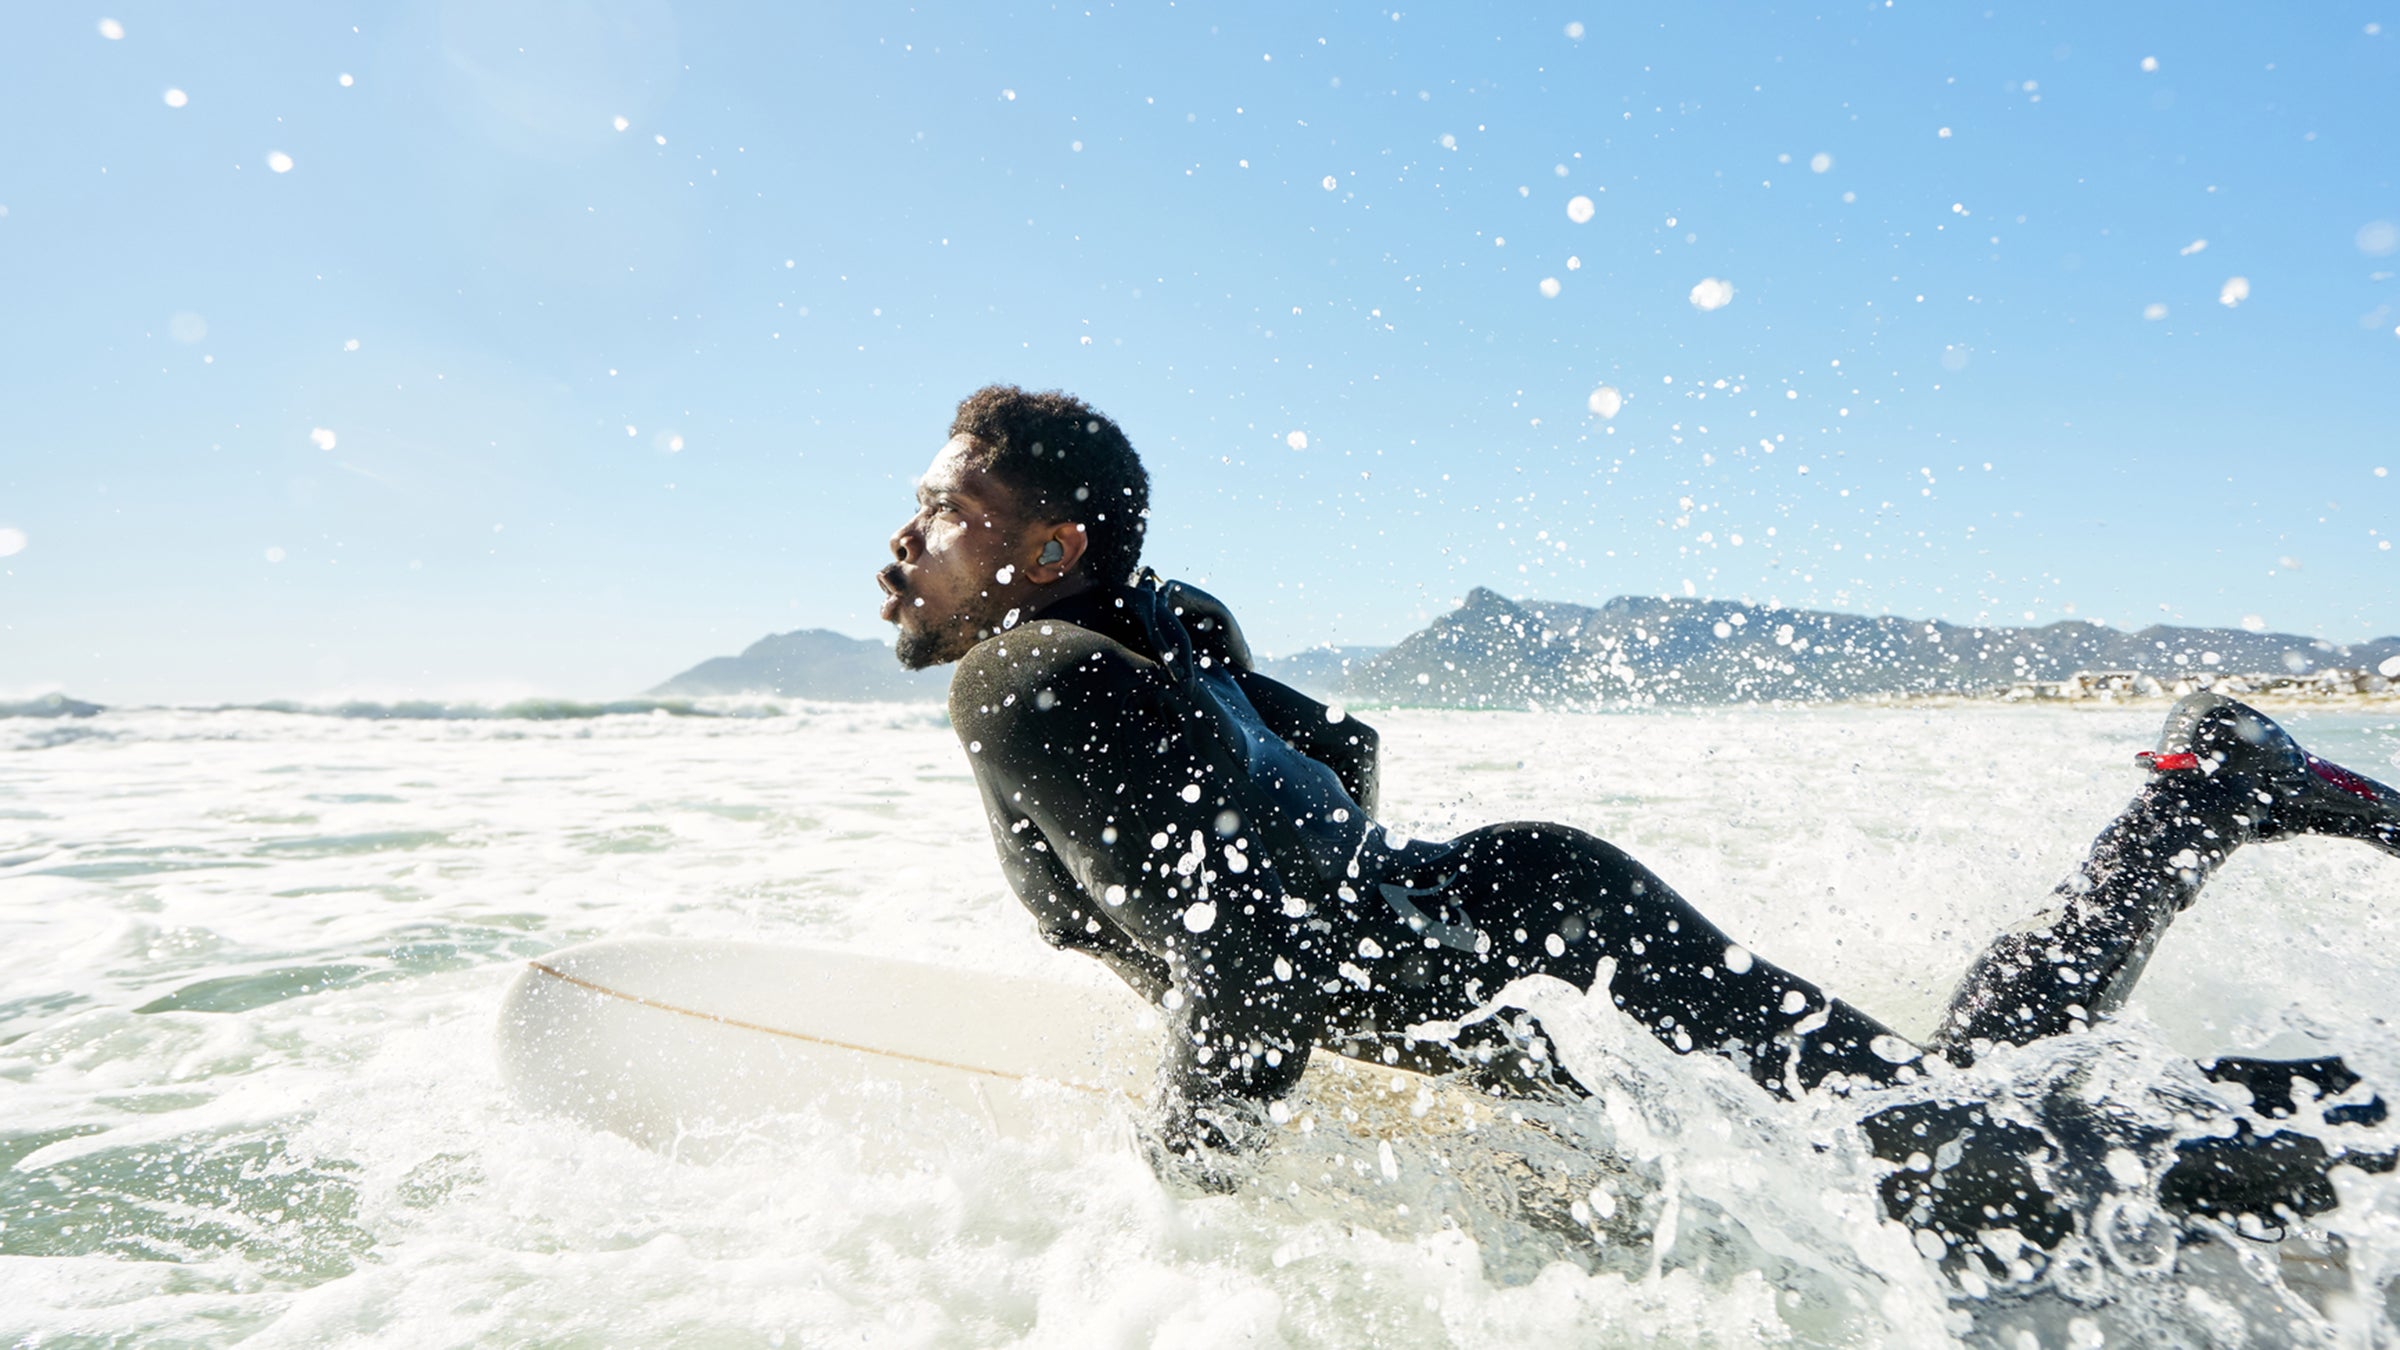 DIY Silver Surfer Surfboard goes SUPER FAST! 